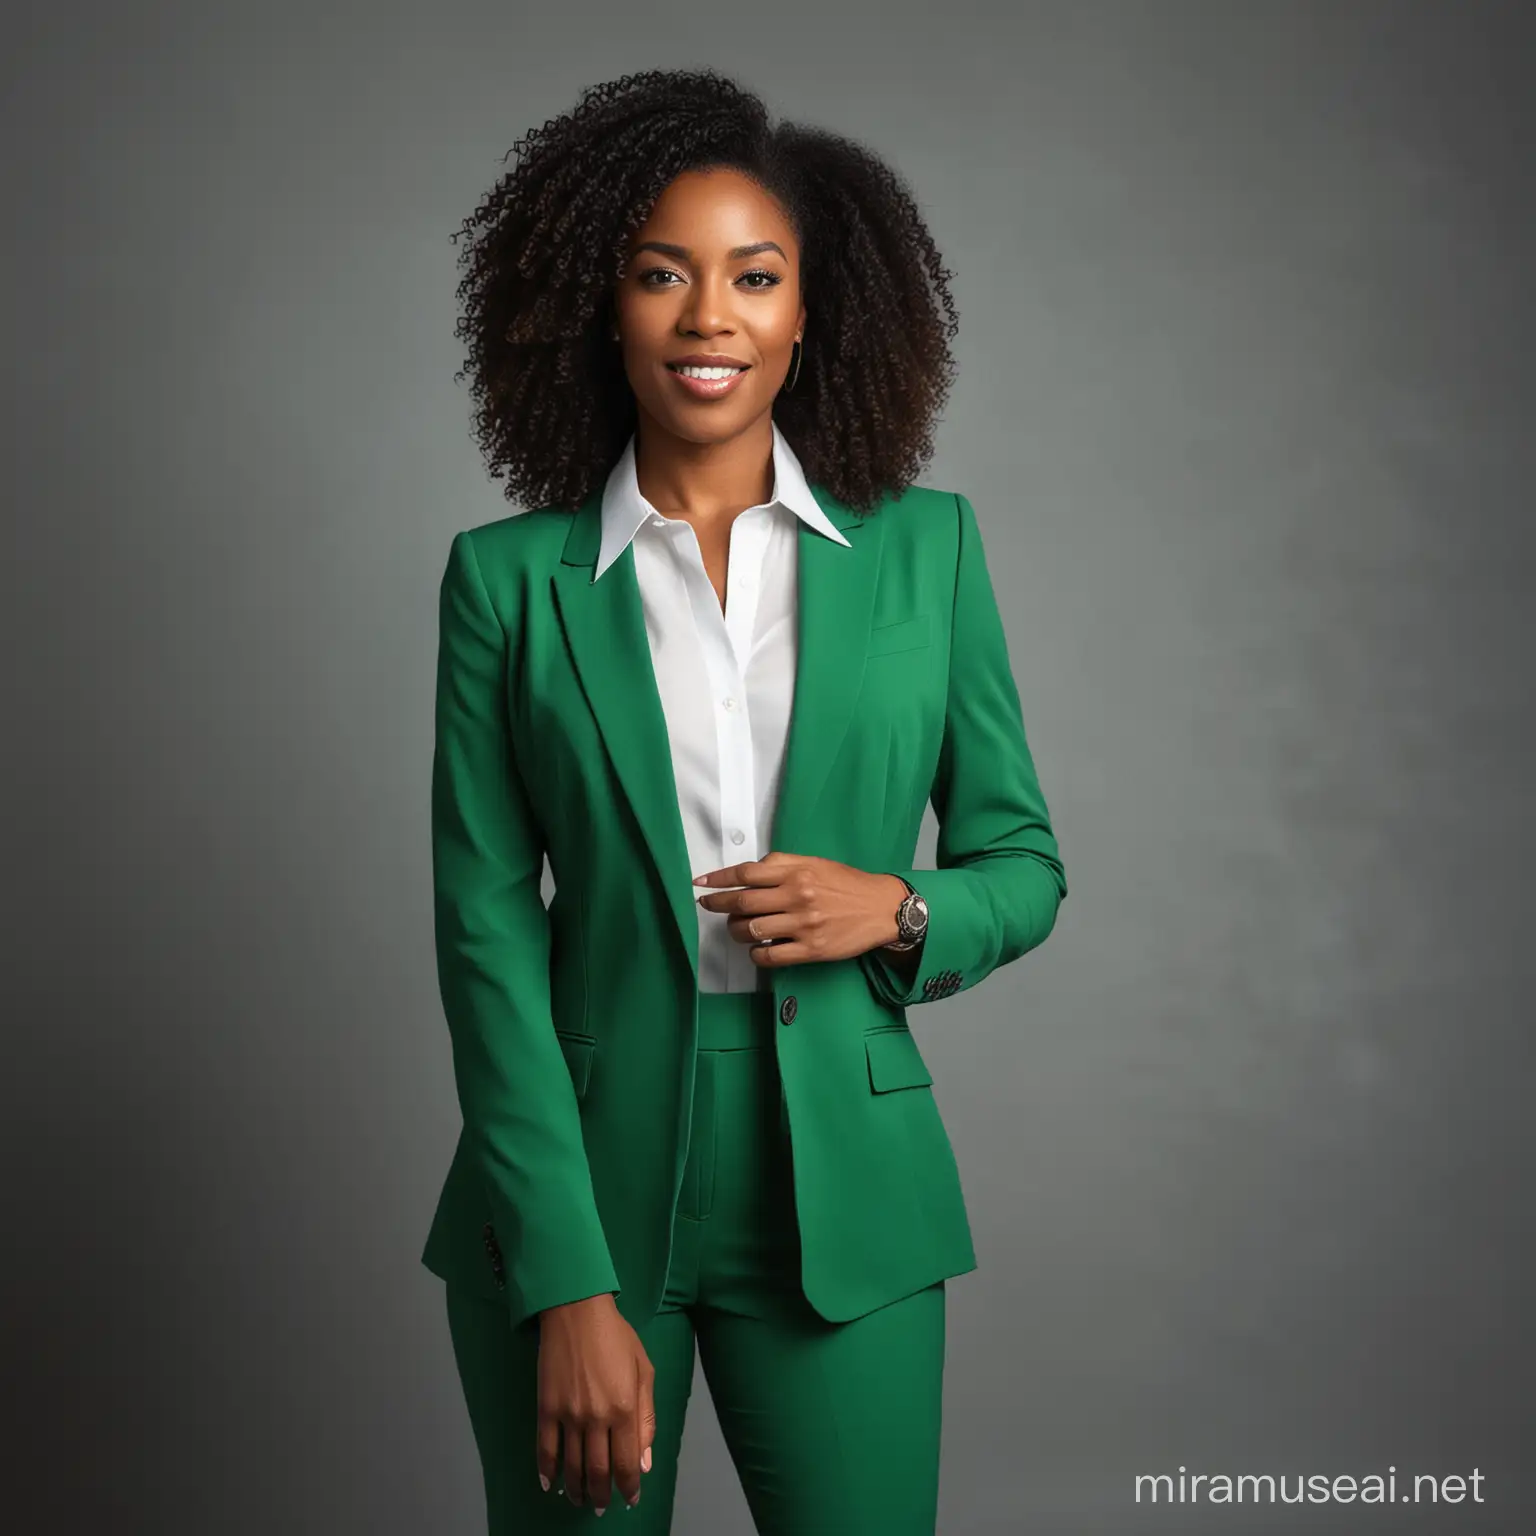 Confident Black Professional Woman in Green and White Attire